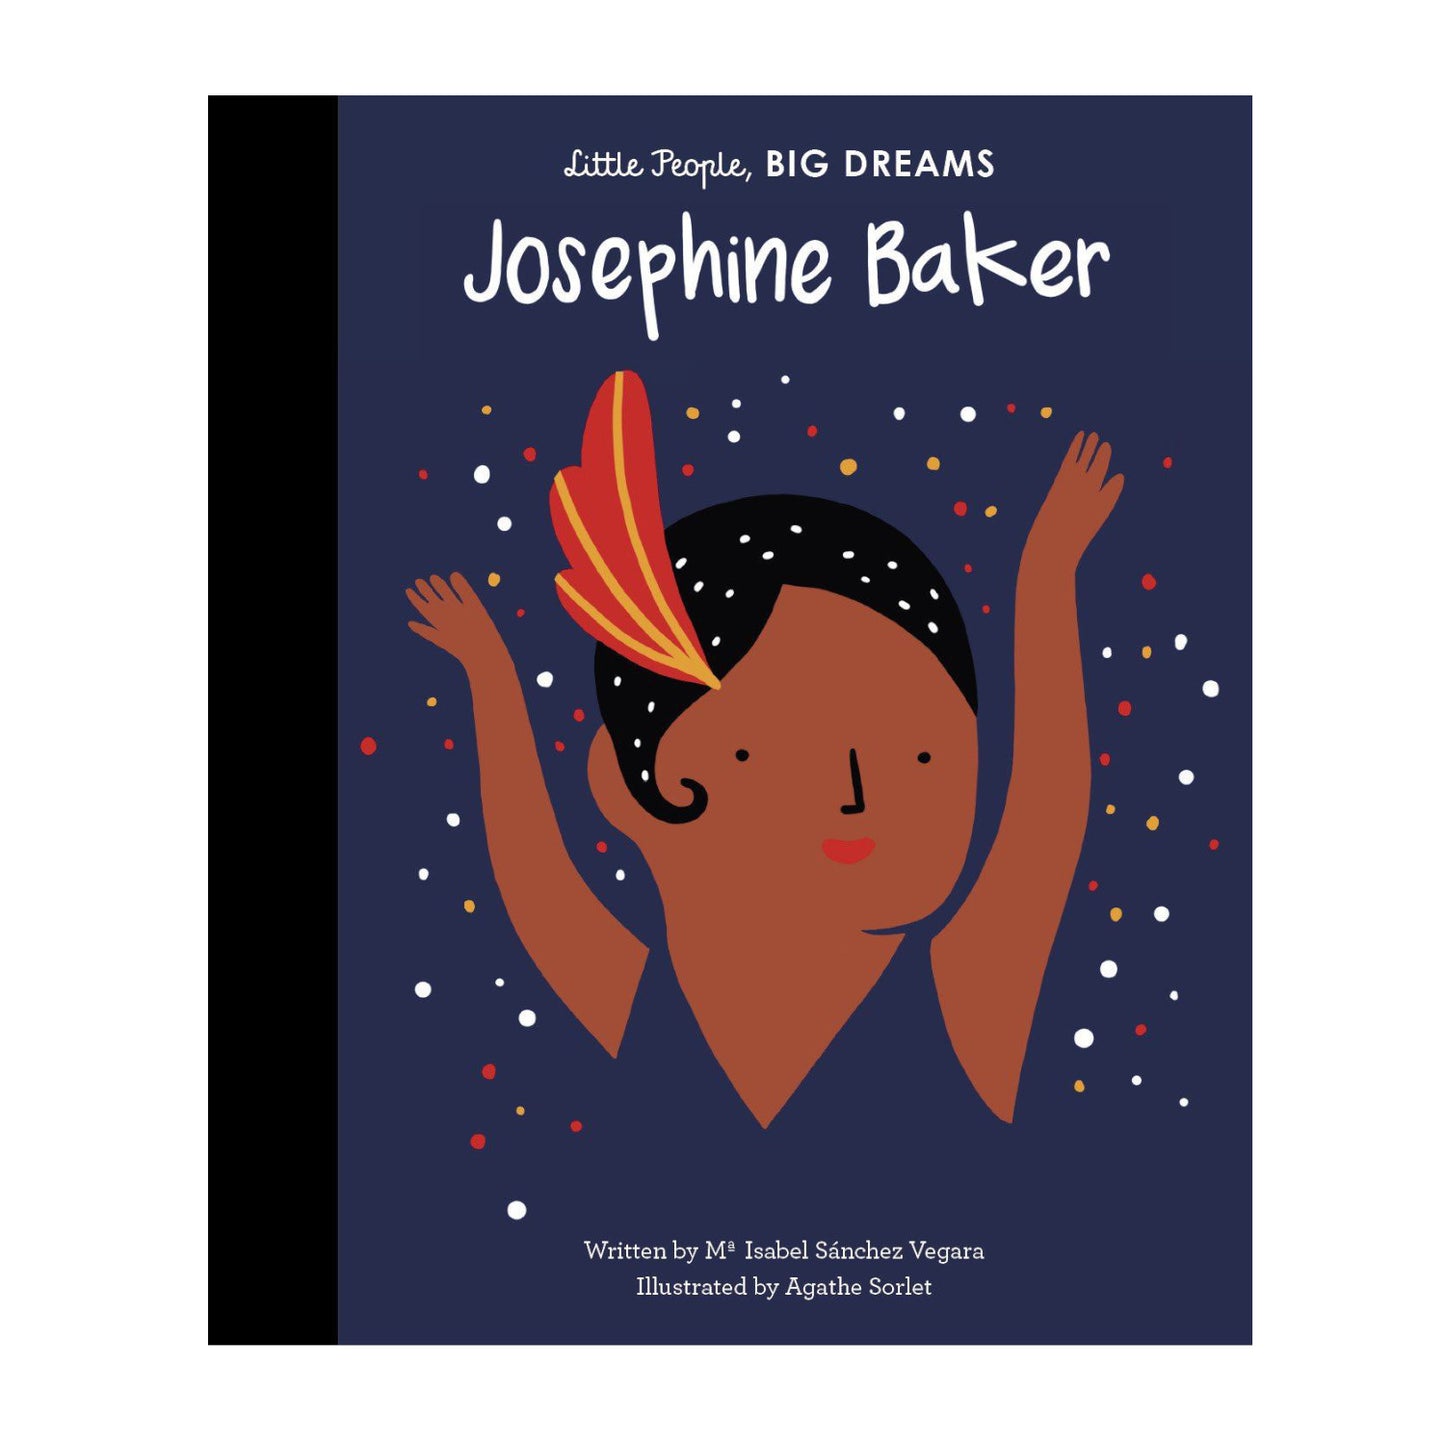 Little people big dreams: Josaphine Baker - I.S Vegara & A.Sorlet inspirational children's book